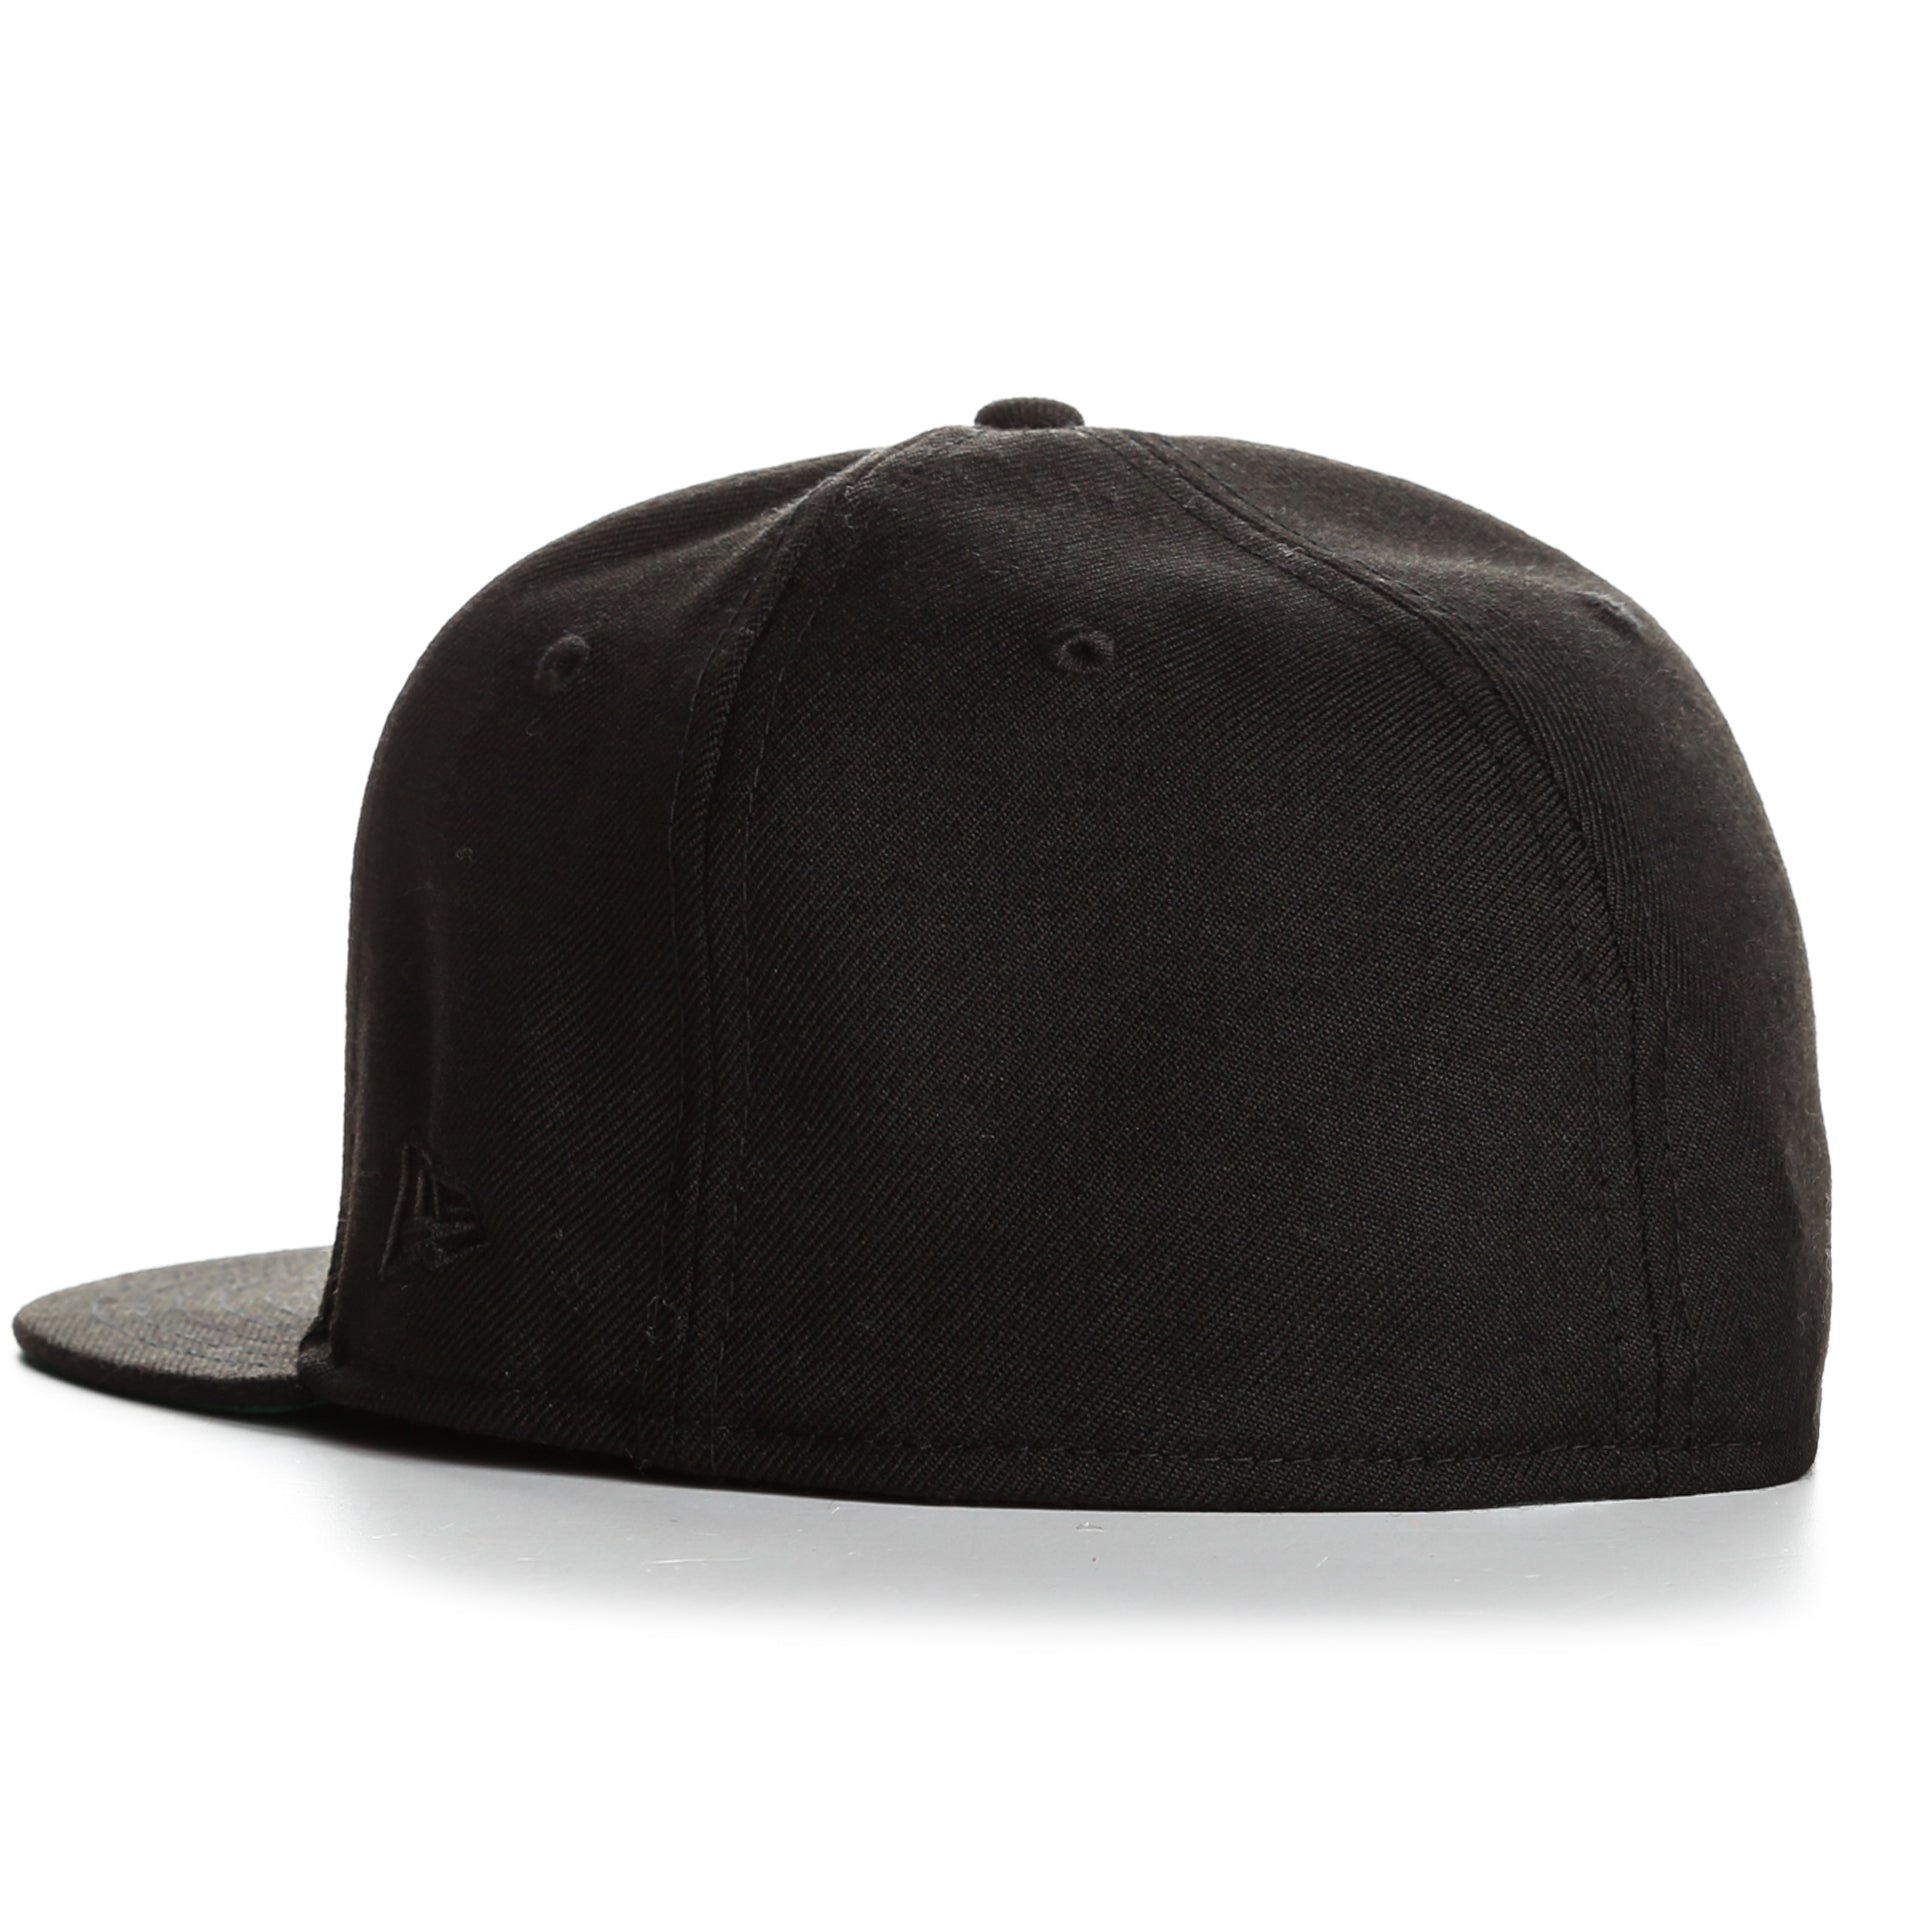 Primitive x New Era 5950 Classic P Fitted Hat - Black - New Star